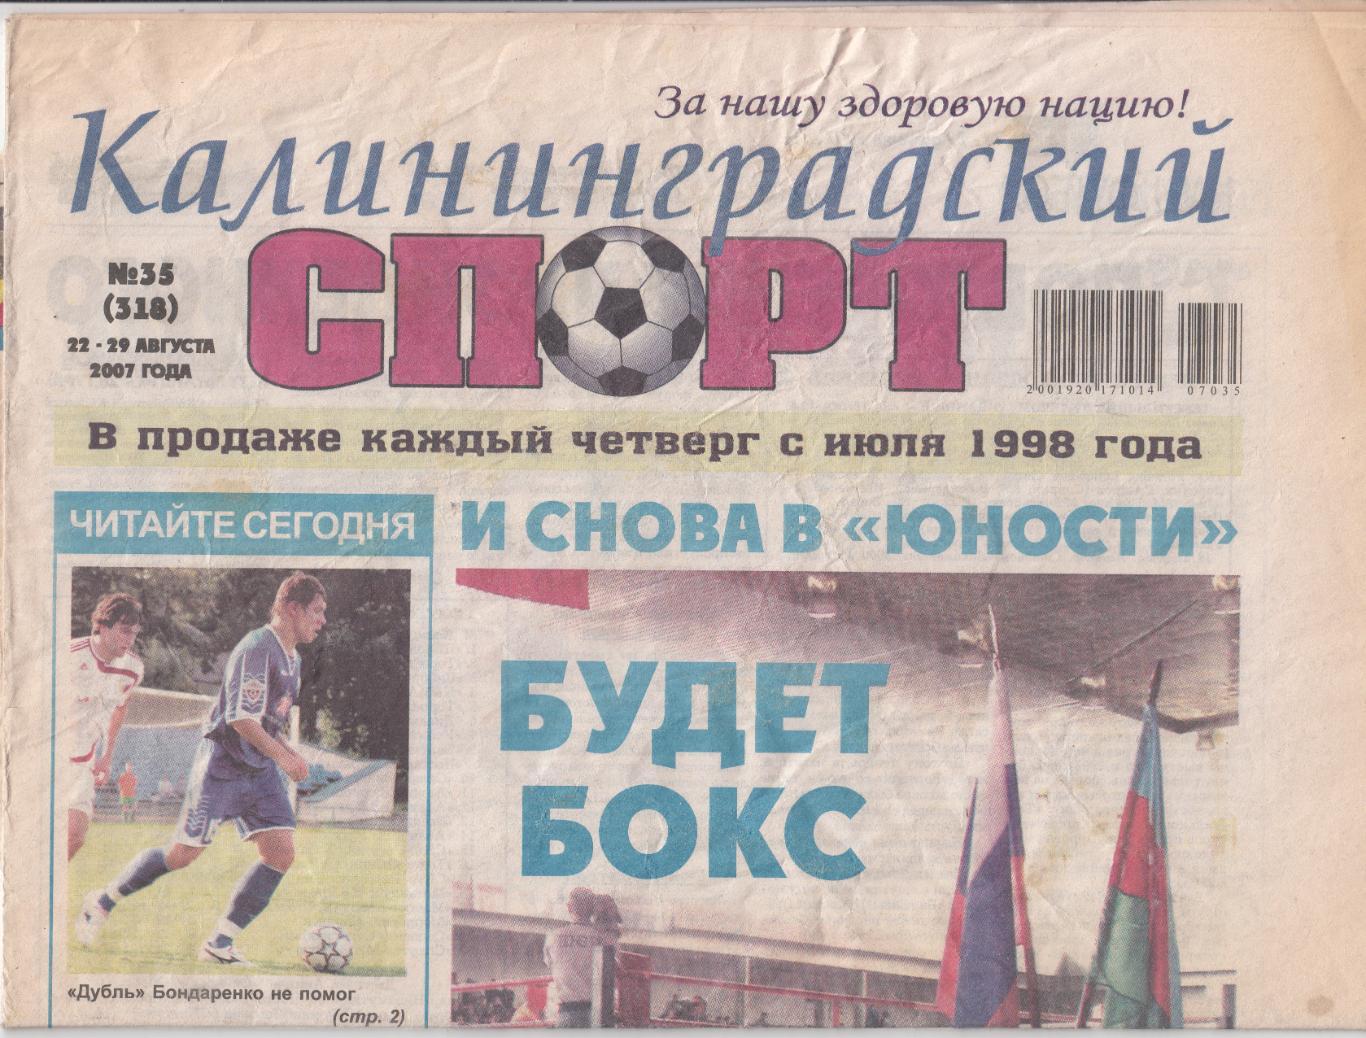 Калининградский спорт № 35 2007 2 обзора матчей Балтики + Балтики-2 (см.ниже)